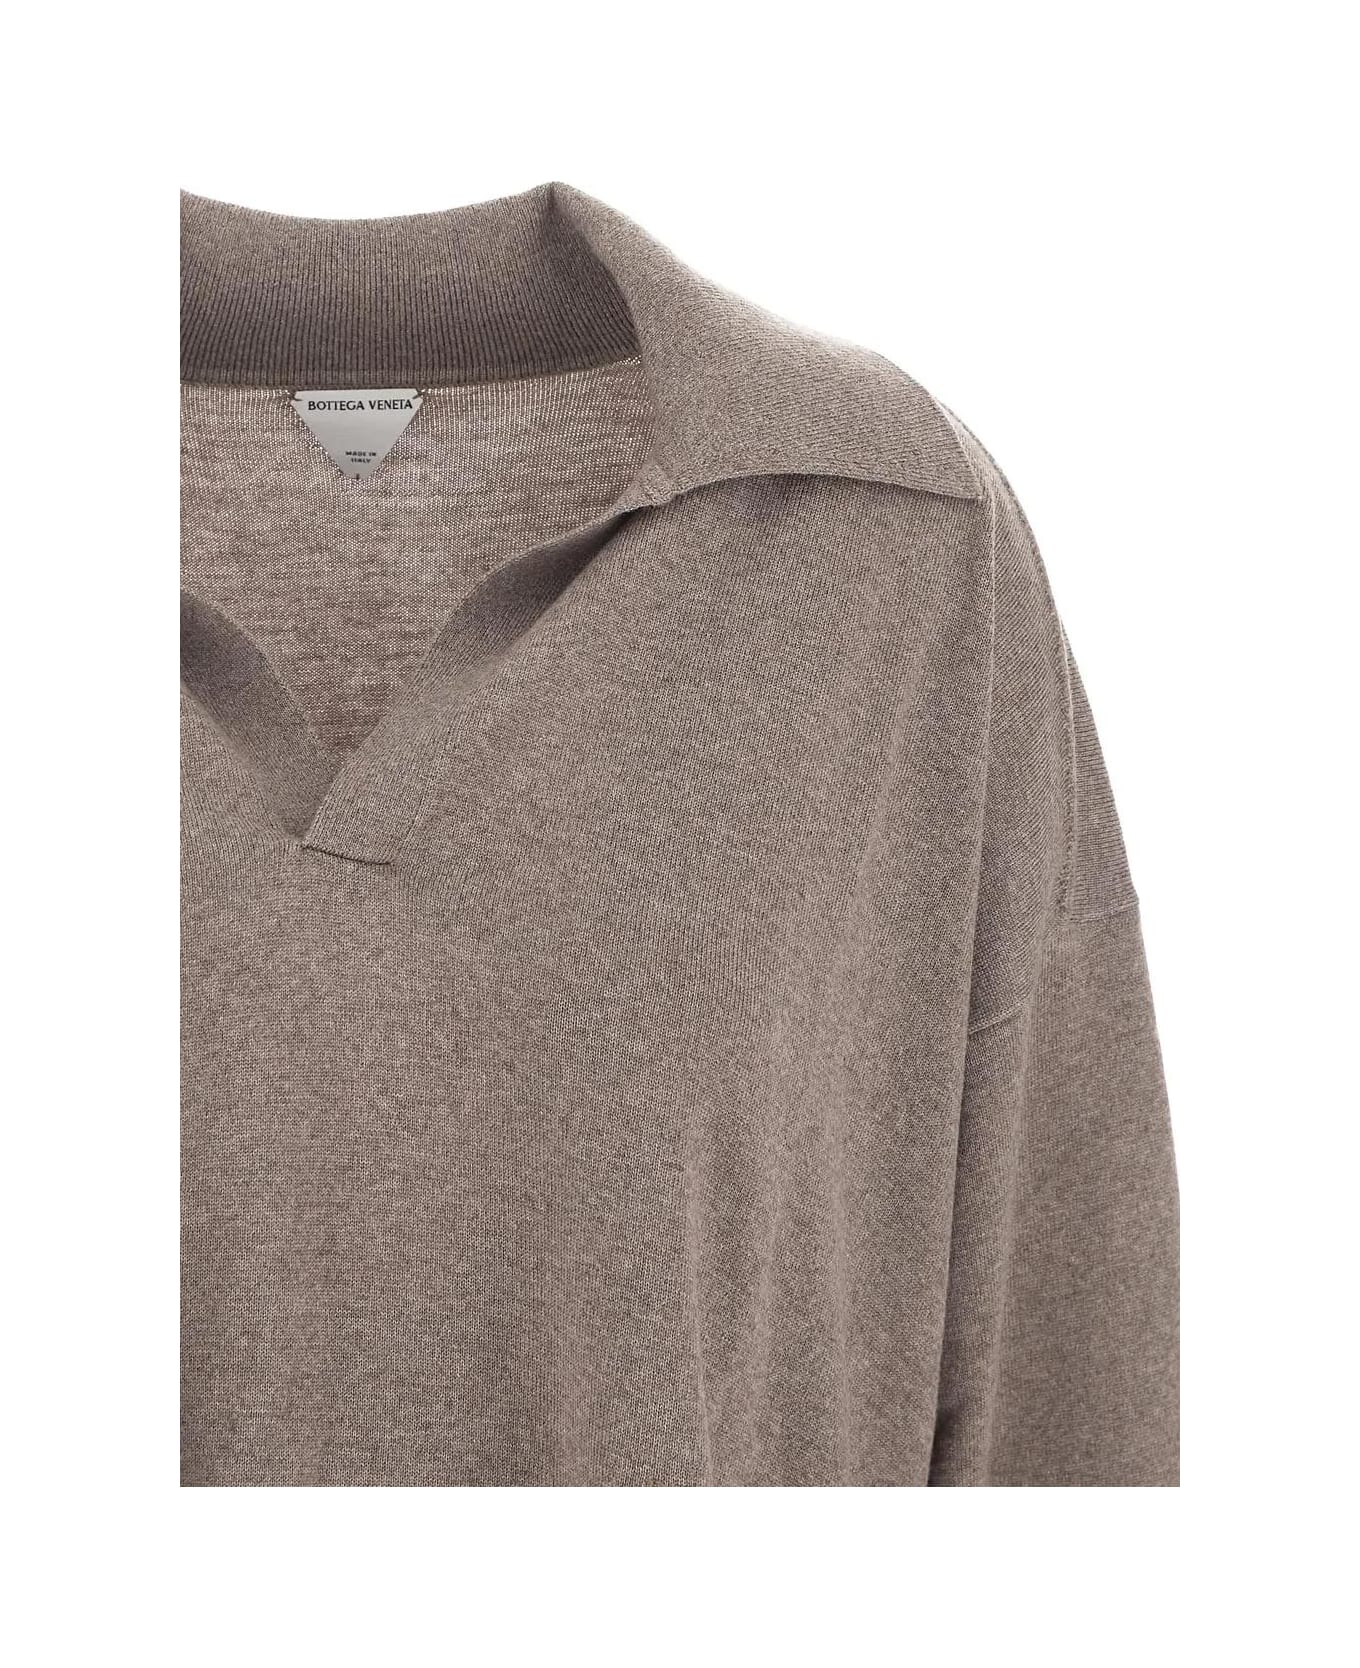 Bottega Veneta Wool Knit Polo Mariners Shirt - RIVERBED